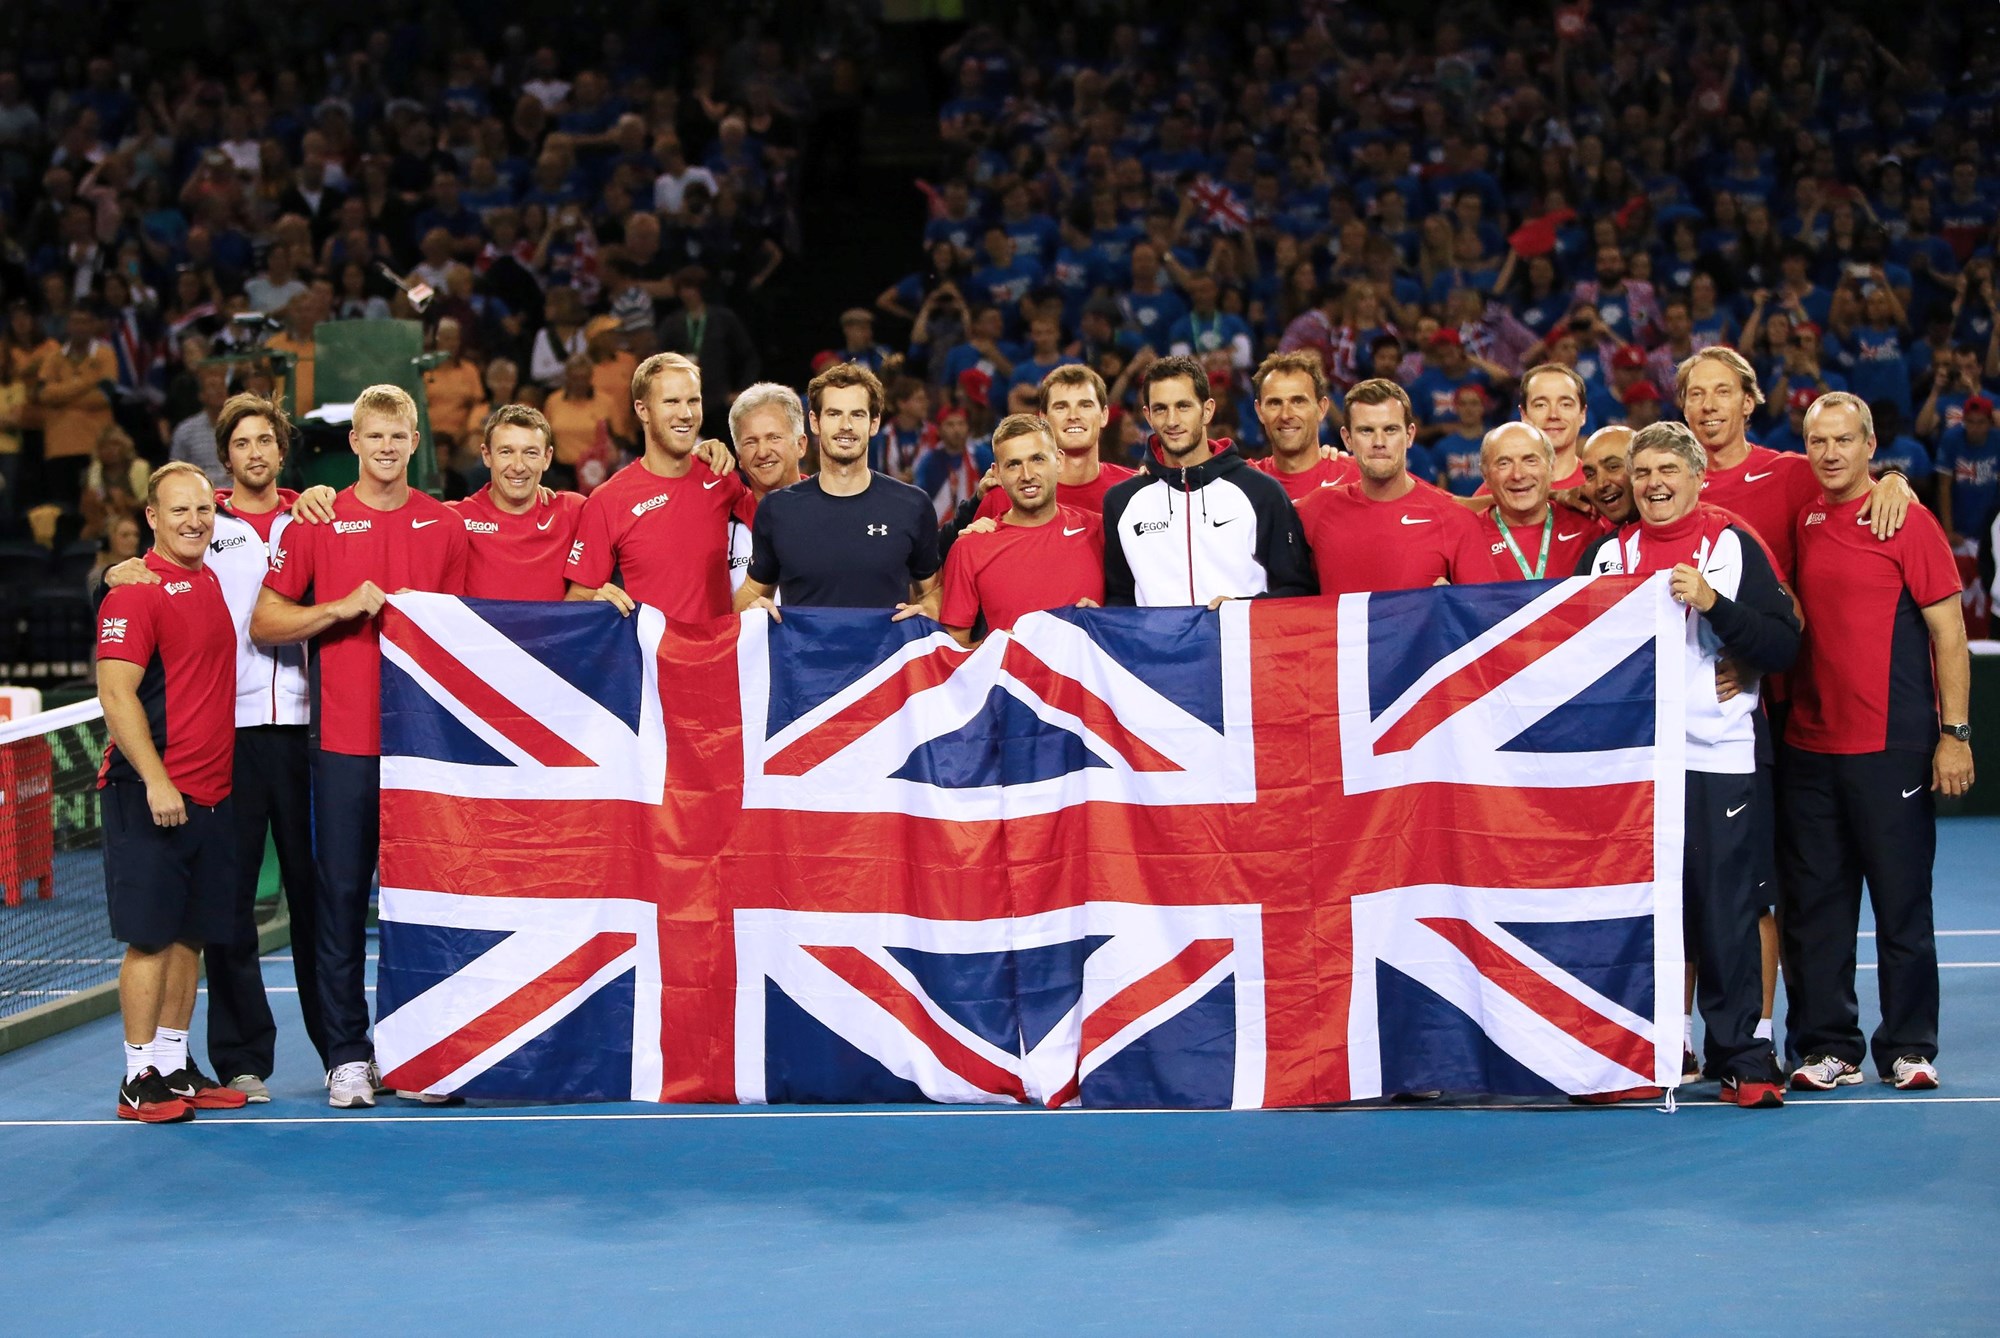 The 2015 Davis Cup squad celebrating their semi-final win over Australia